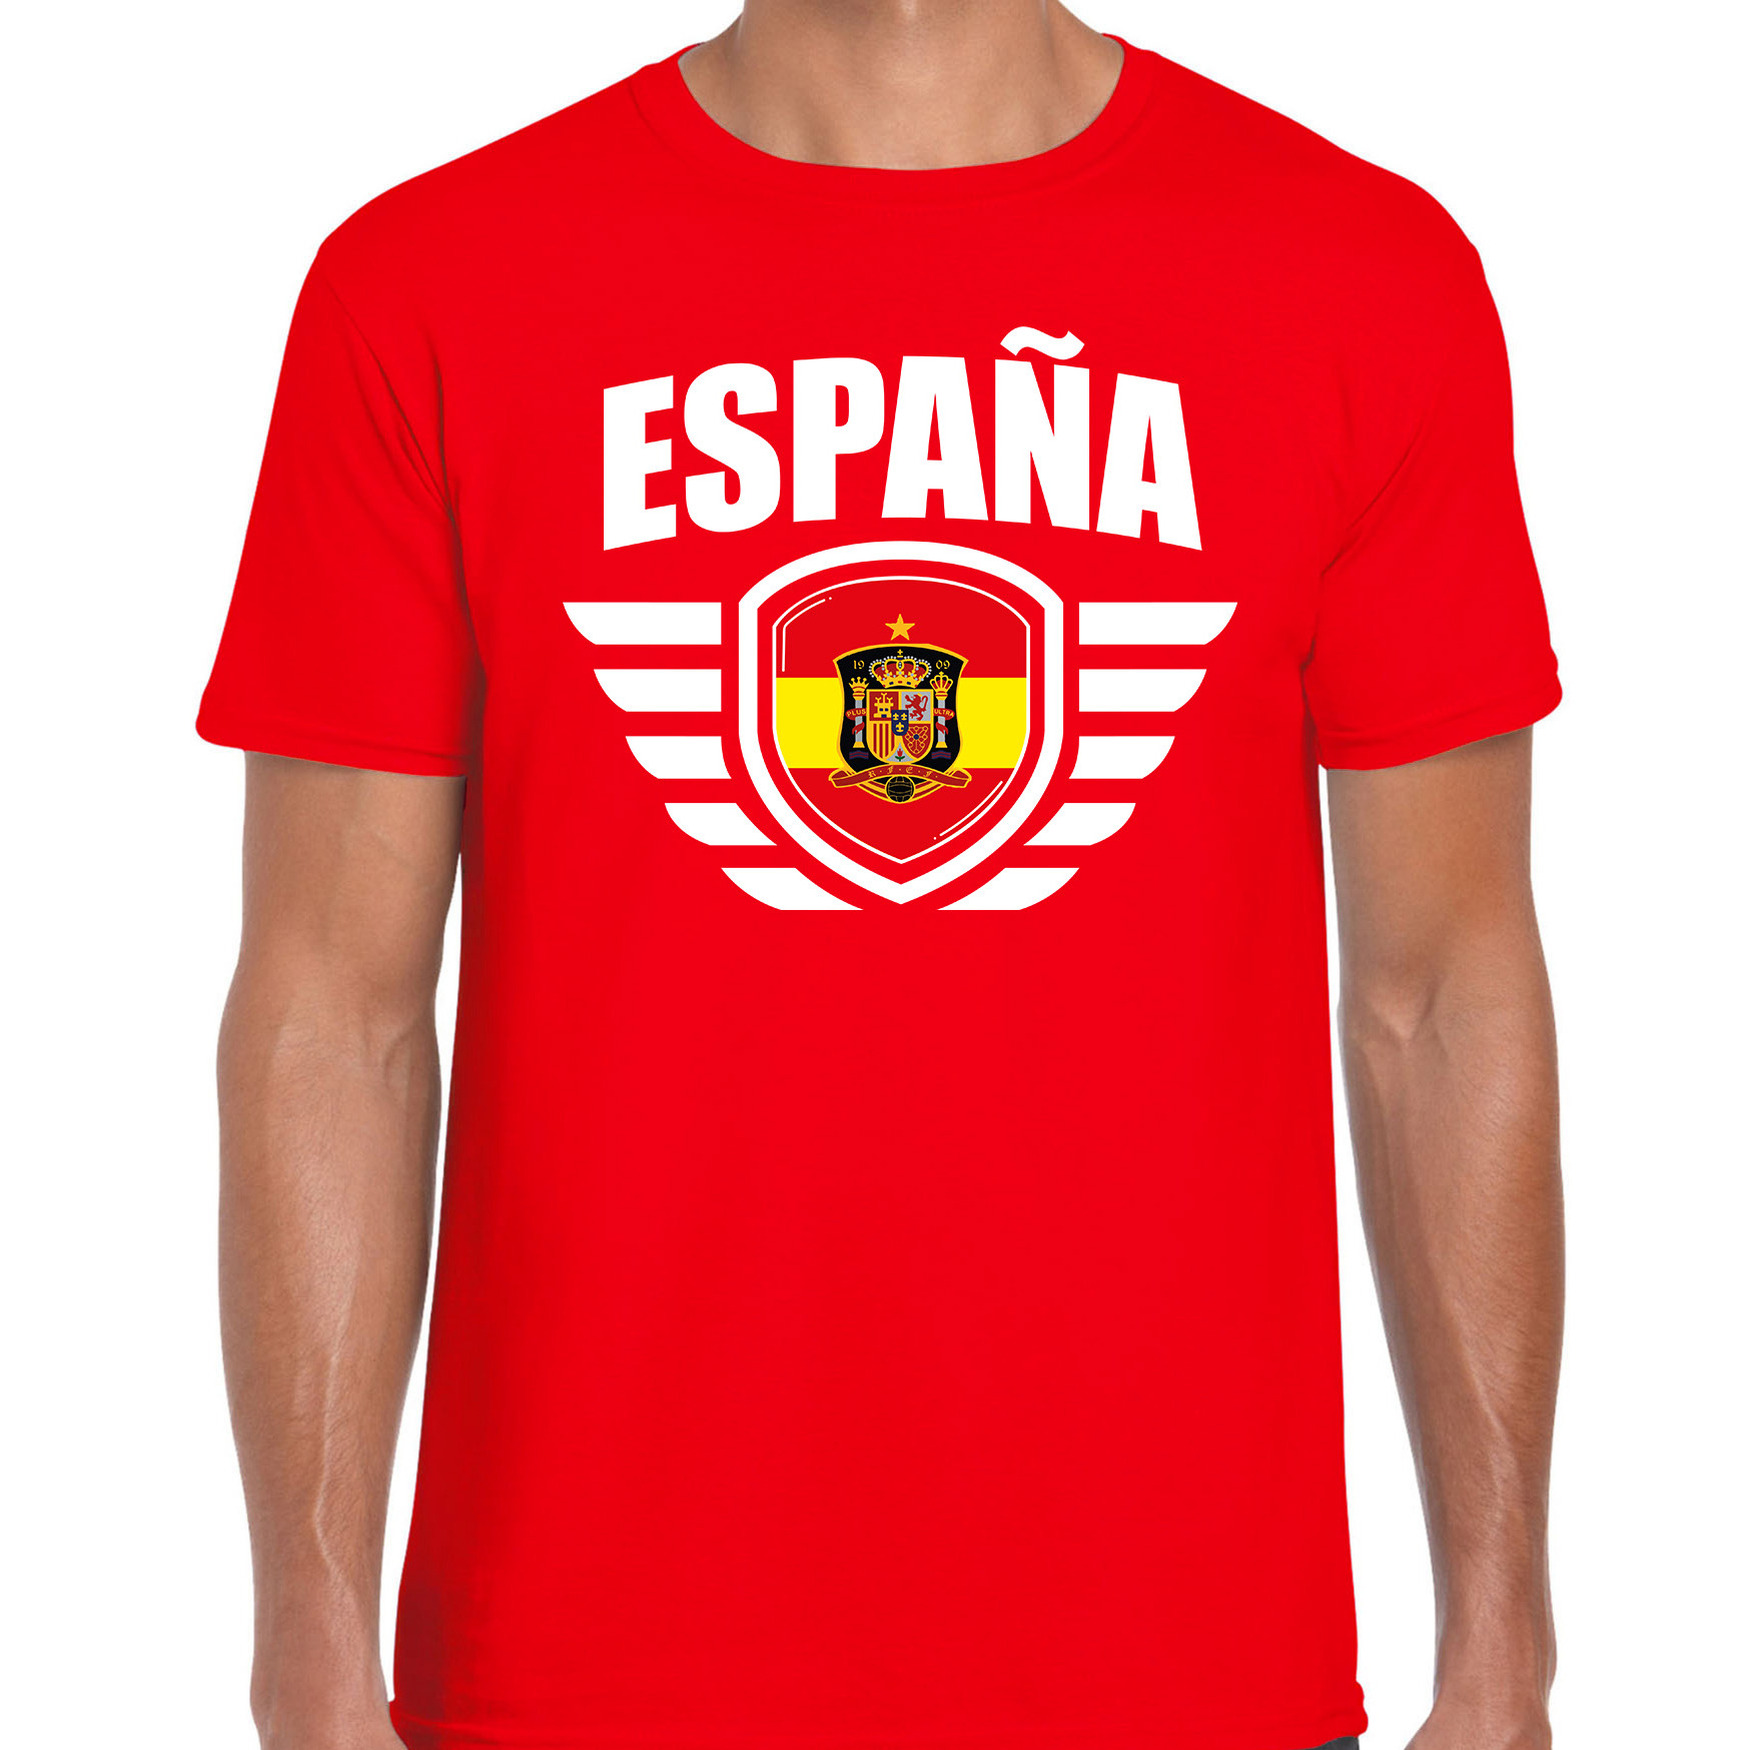 Espana landen voetbal t shirt rood heren EK WK voetbal